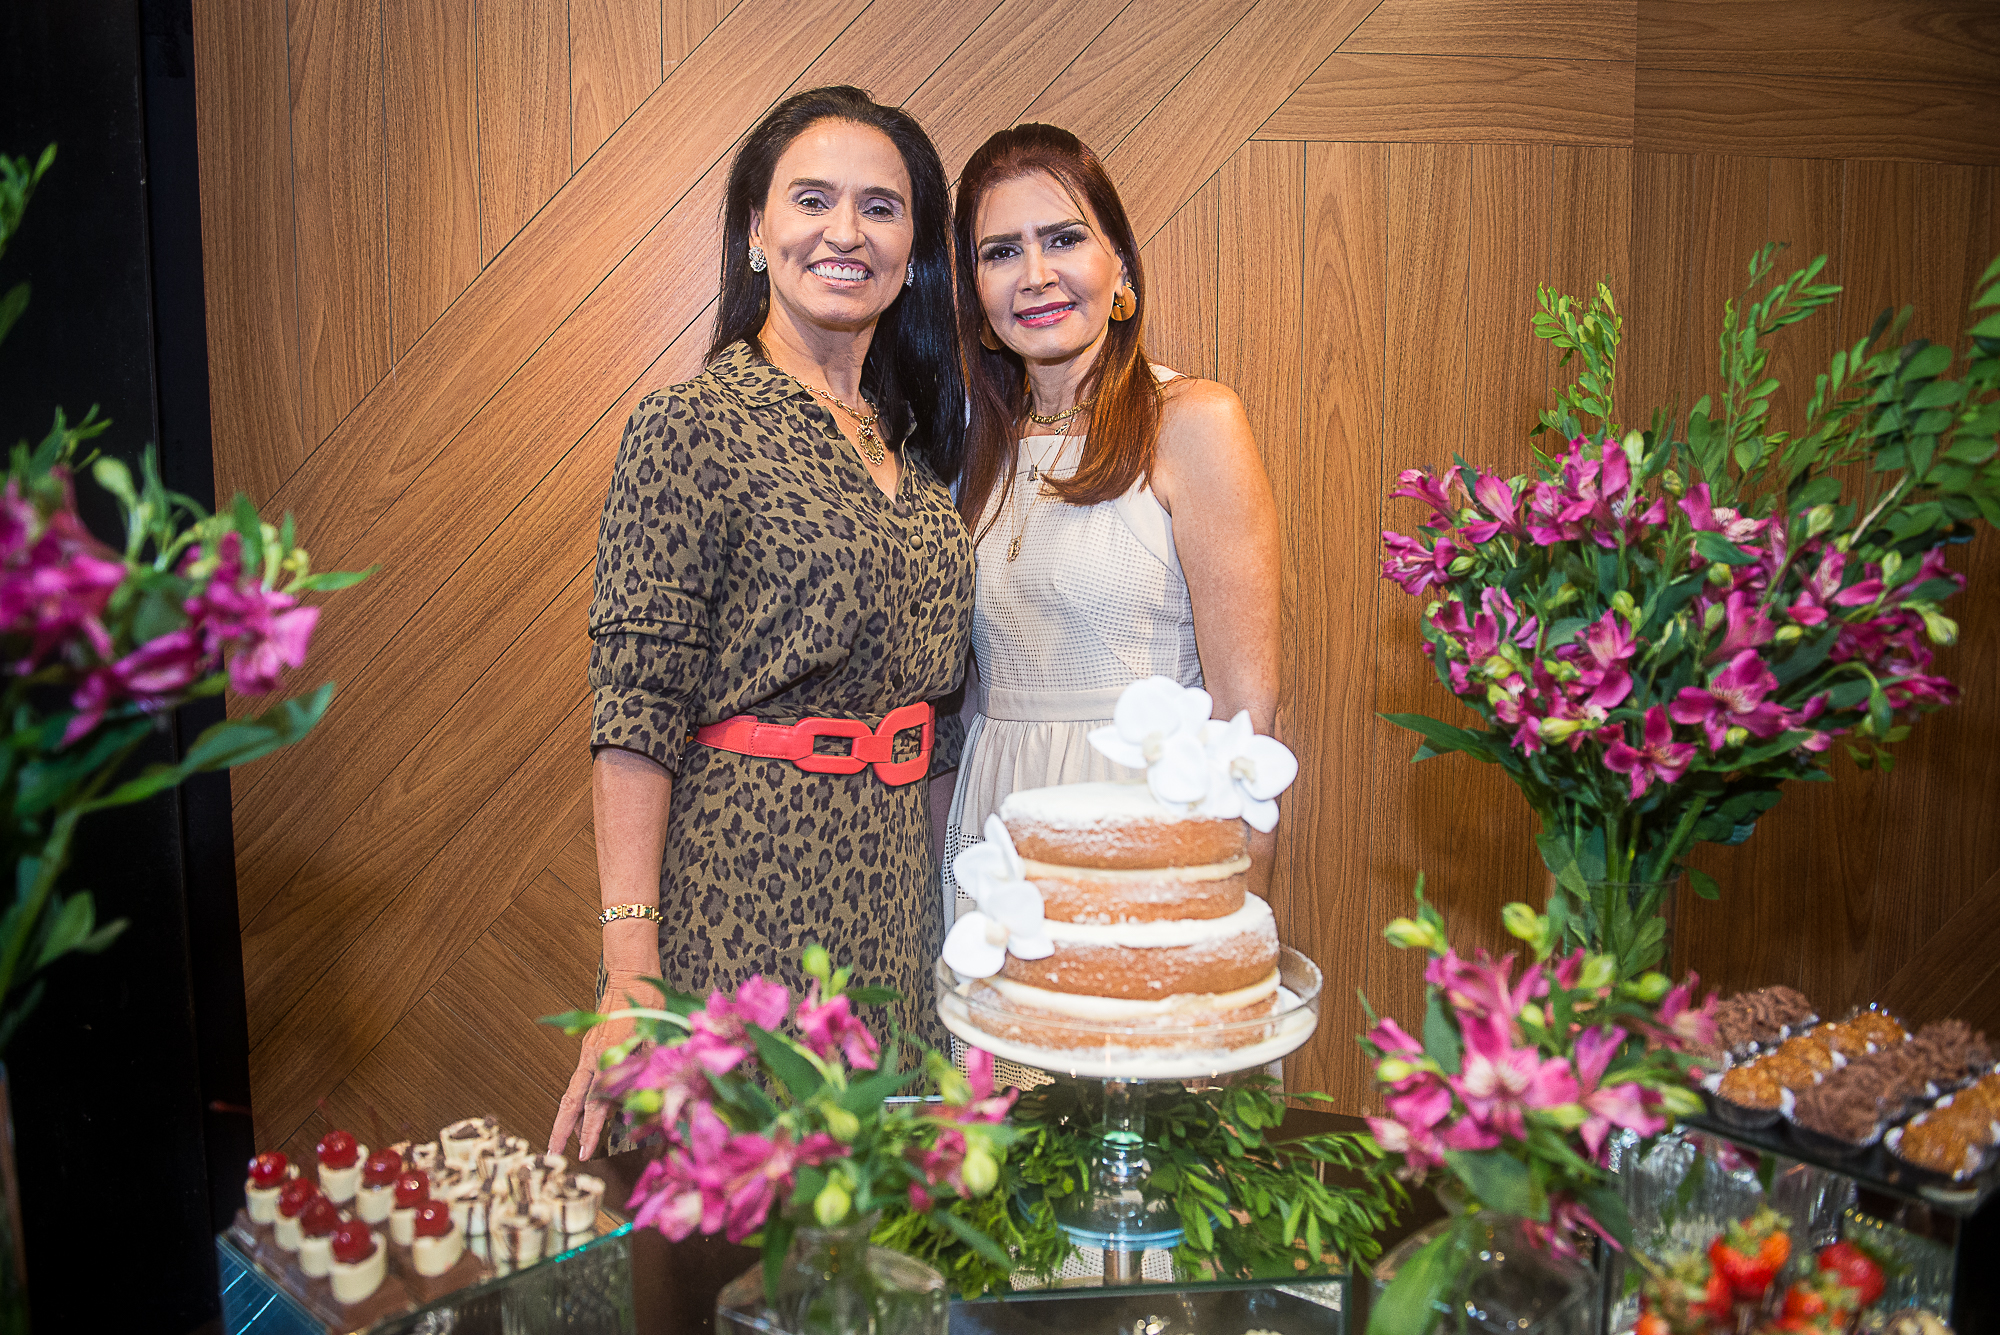 Lorena Pouchain e Neuza Rocha ganham aniversário surpresa das amigas